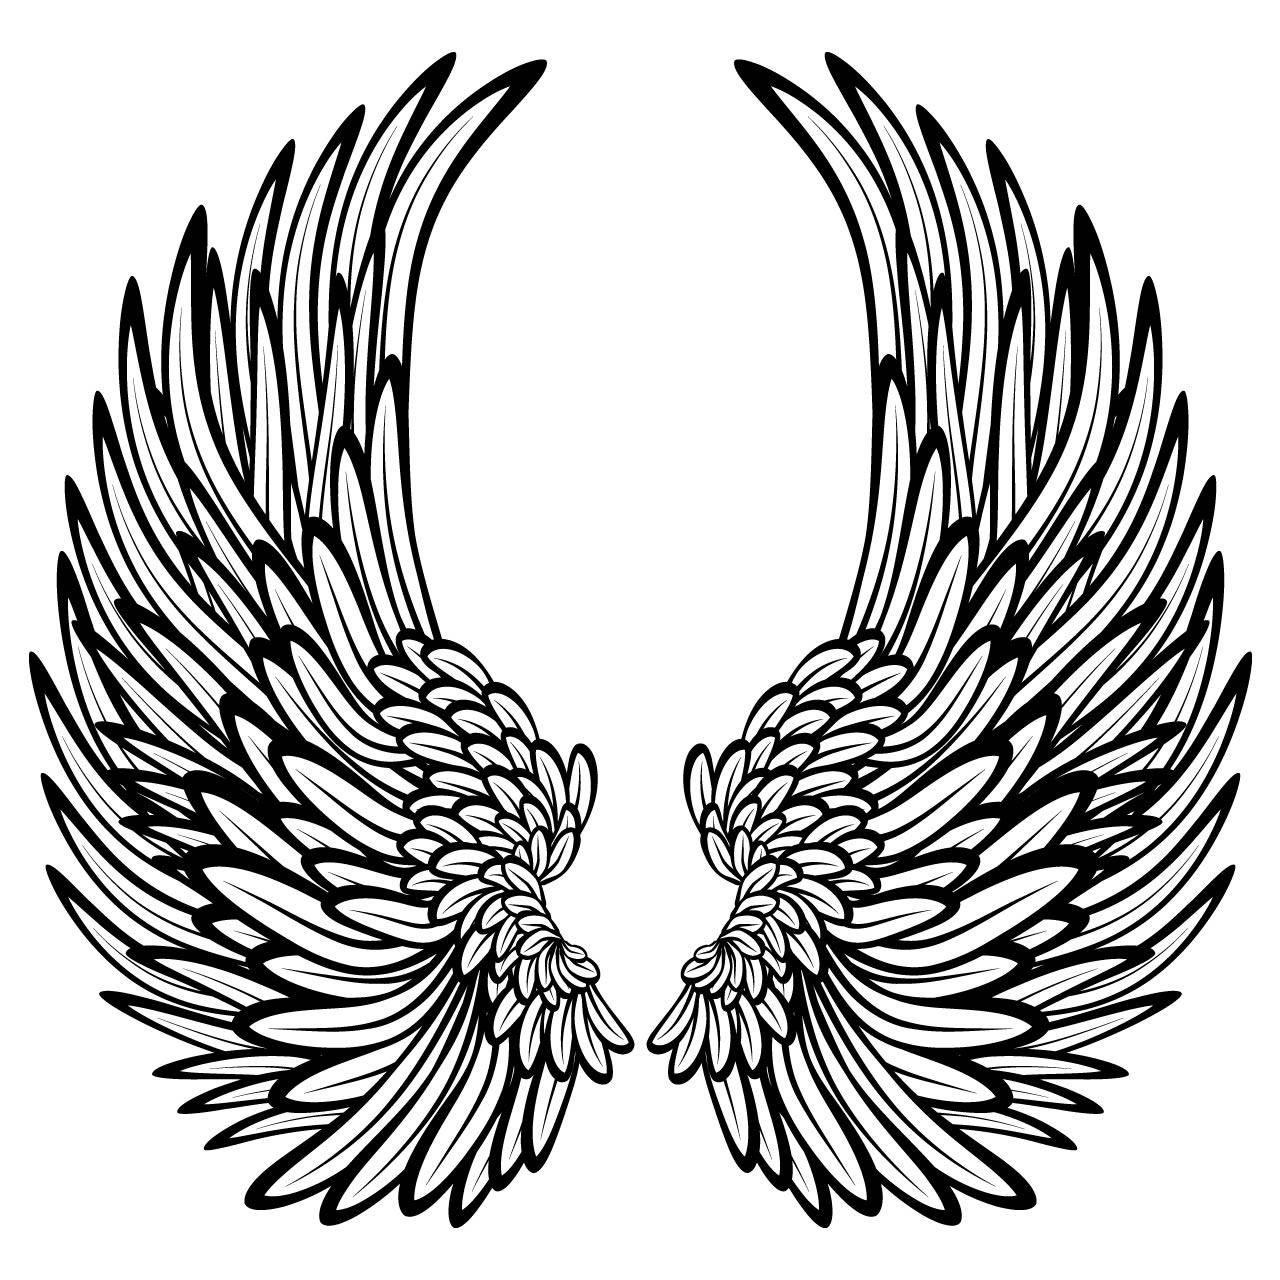 Angel no wings clipart - ClipartFox